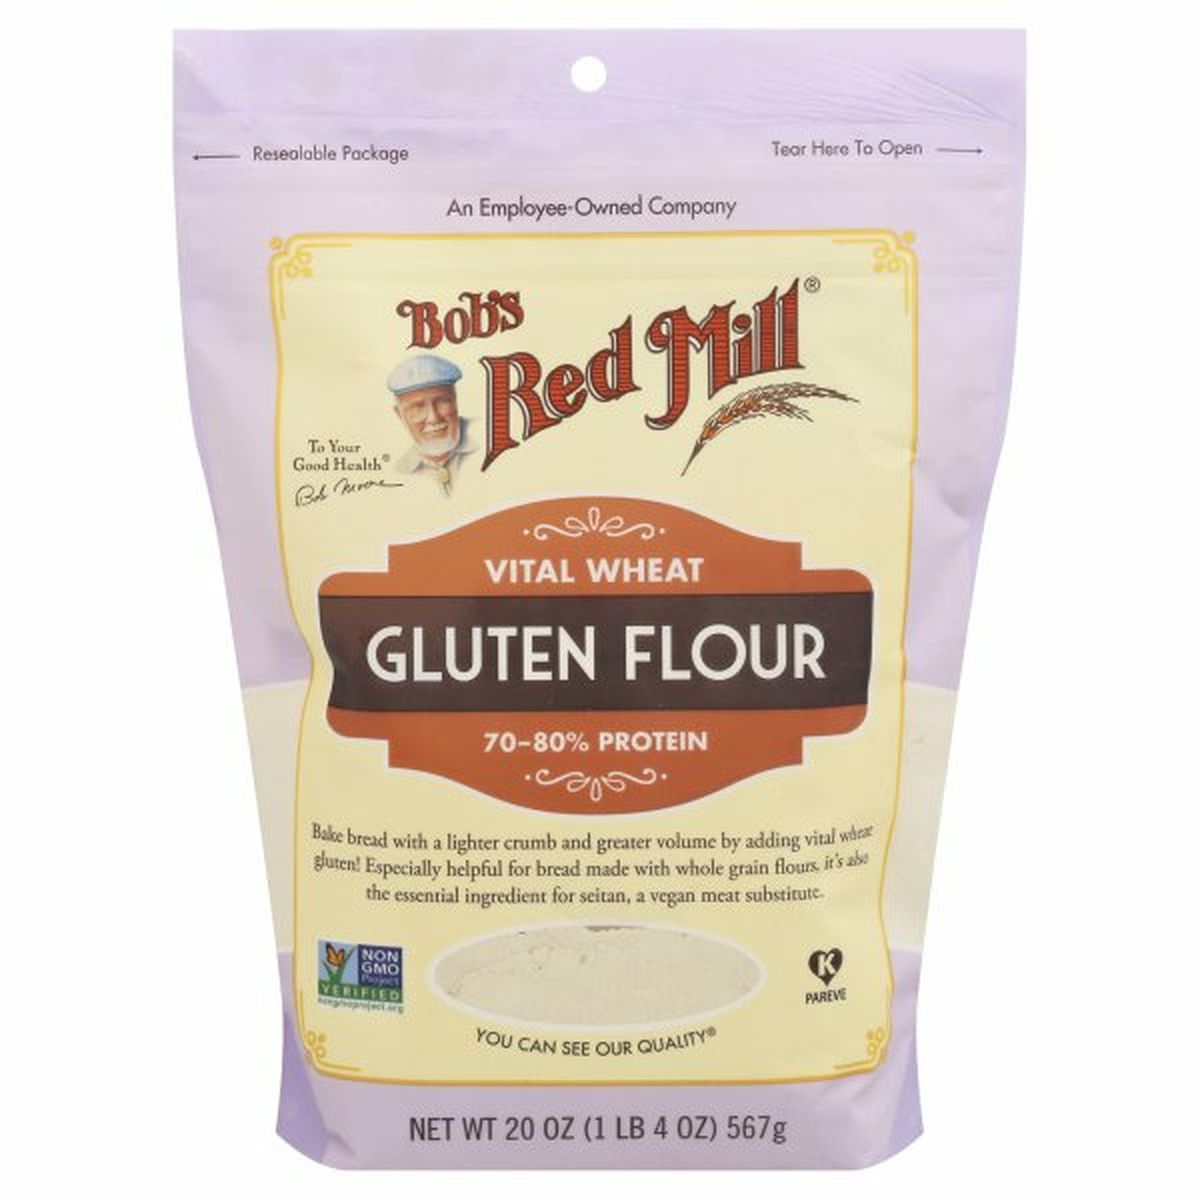 Calories in Bob's Red Mill Gluten Flour, Vital Wheat